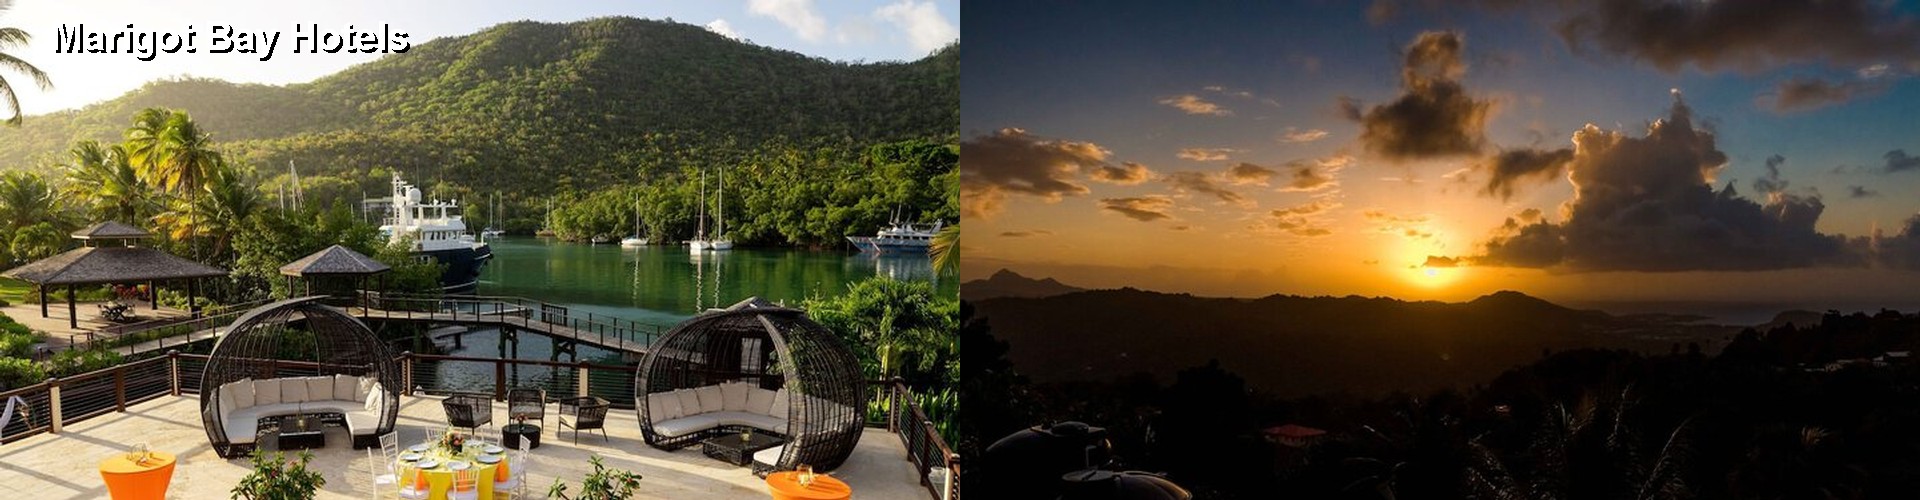 5 Best Hotels near Marigot Bay